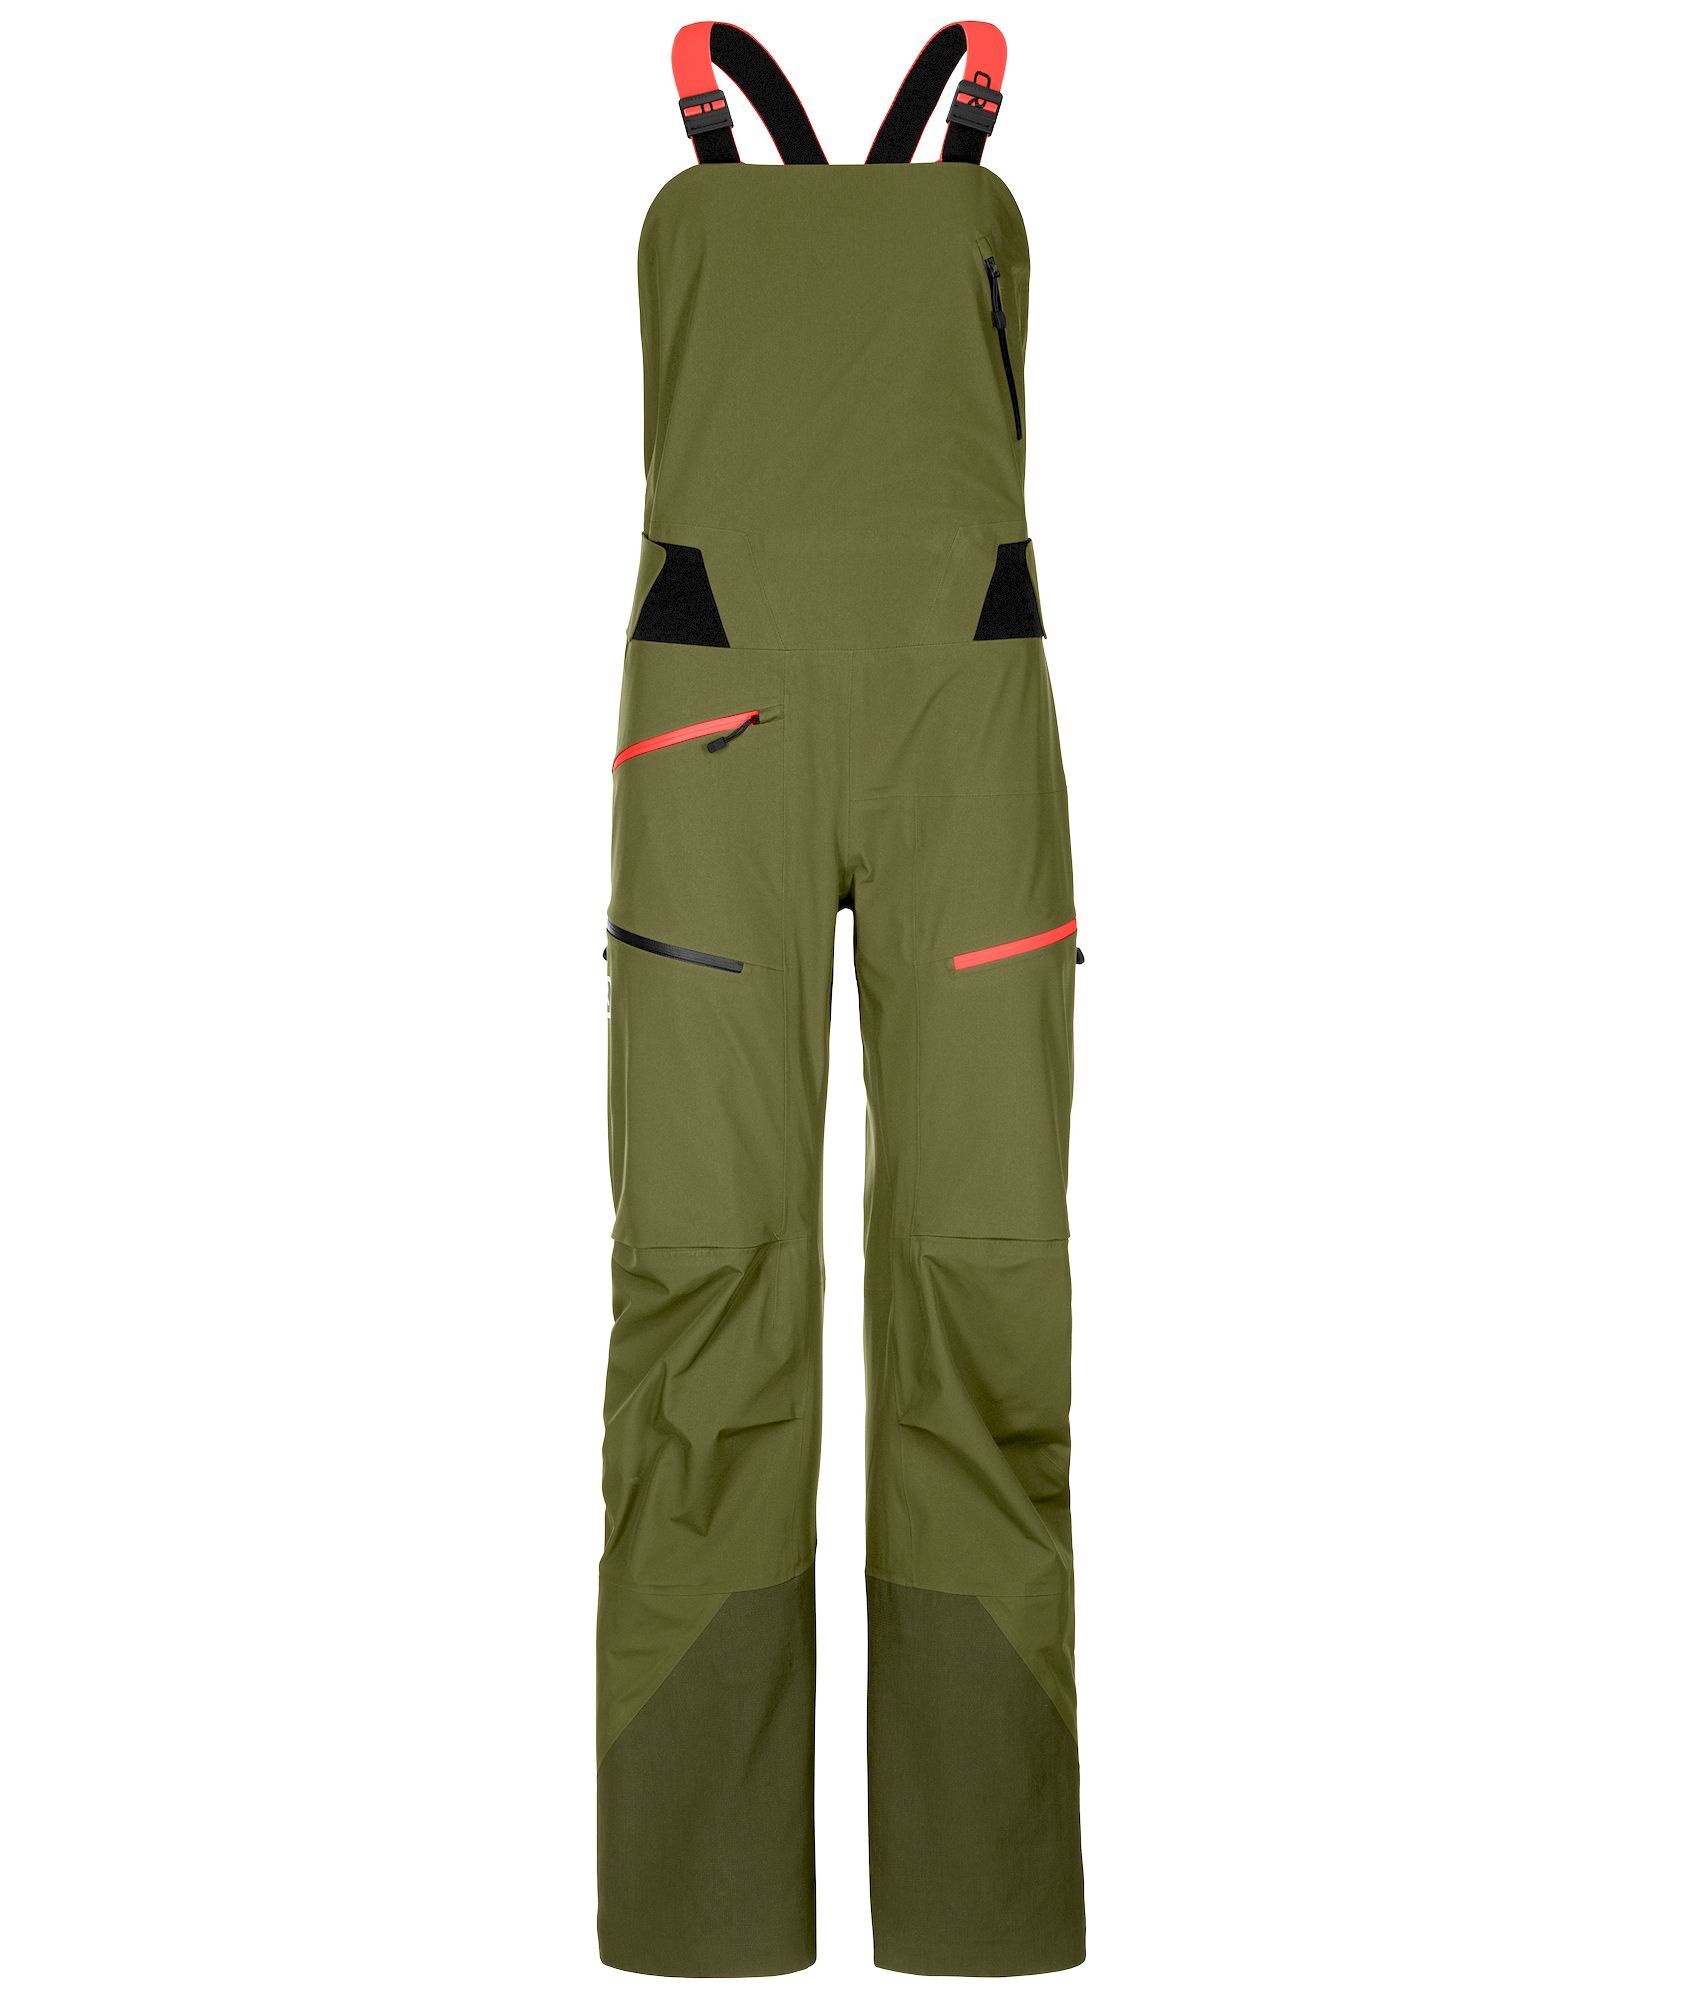 Ortovox 3L Deep Shell Bib Pants - Ski trousers - Women's